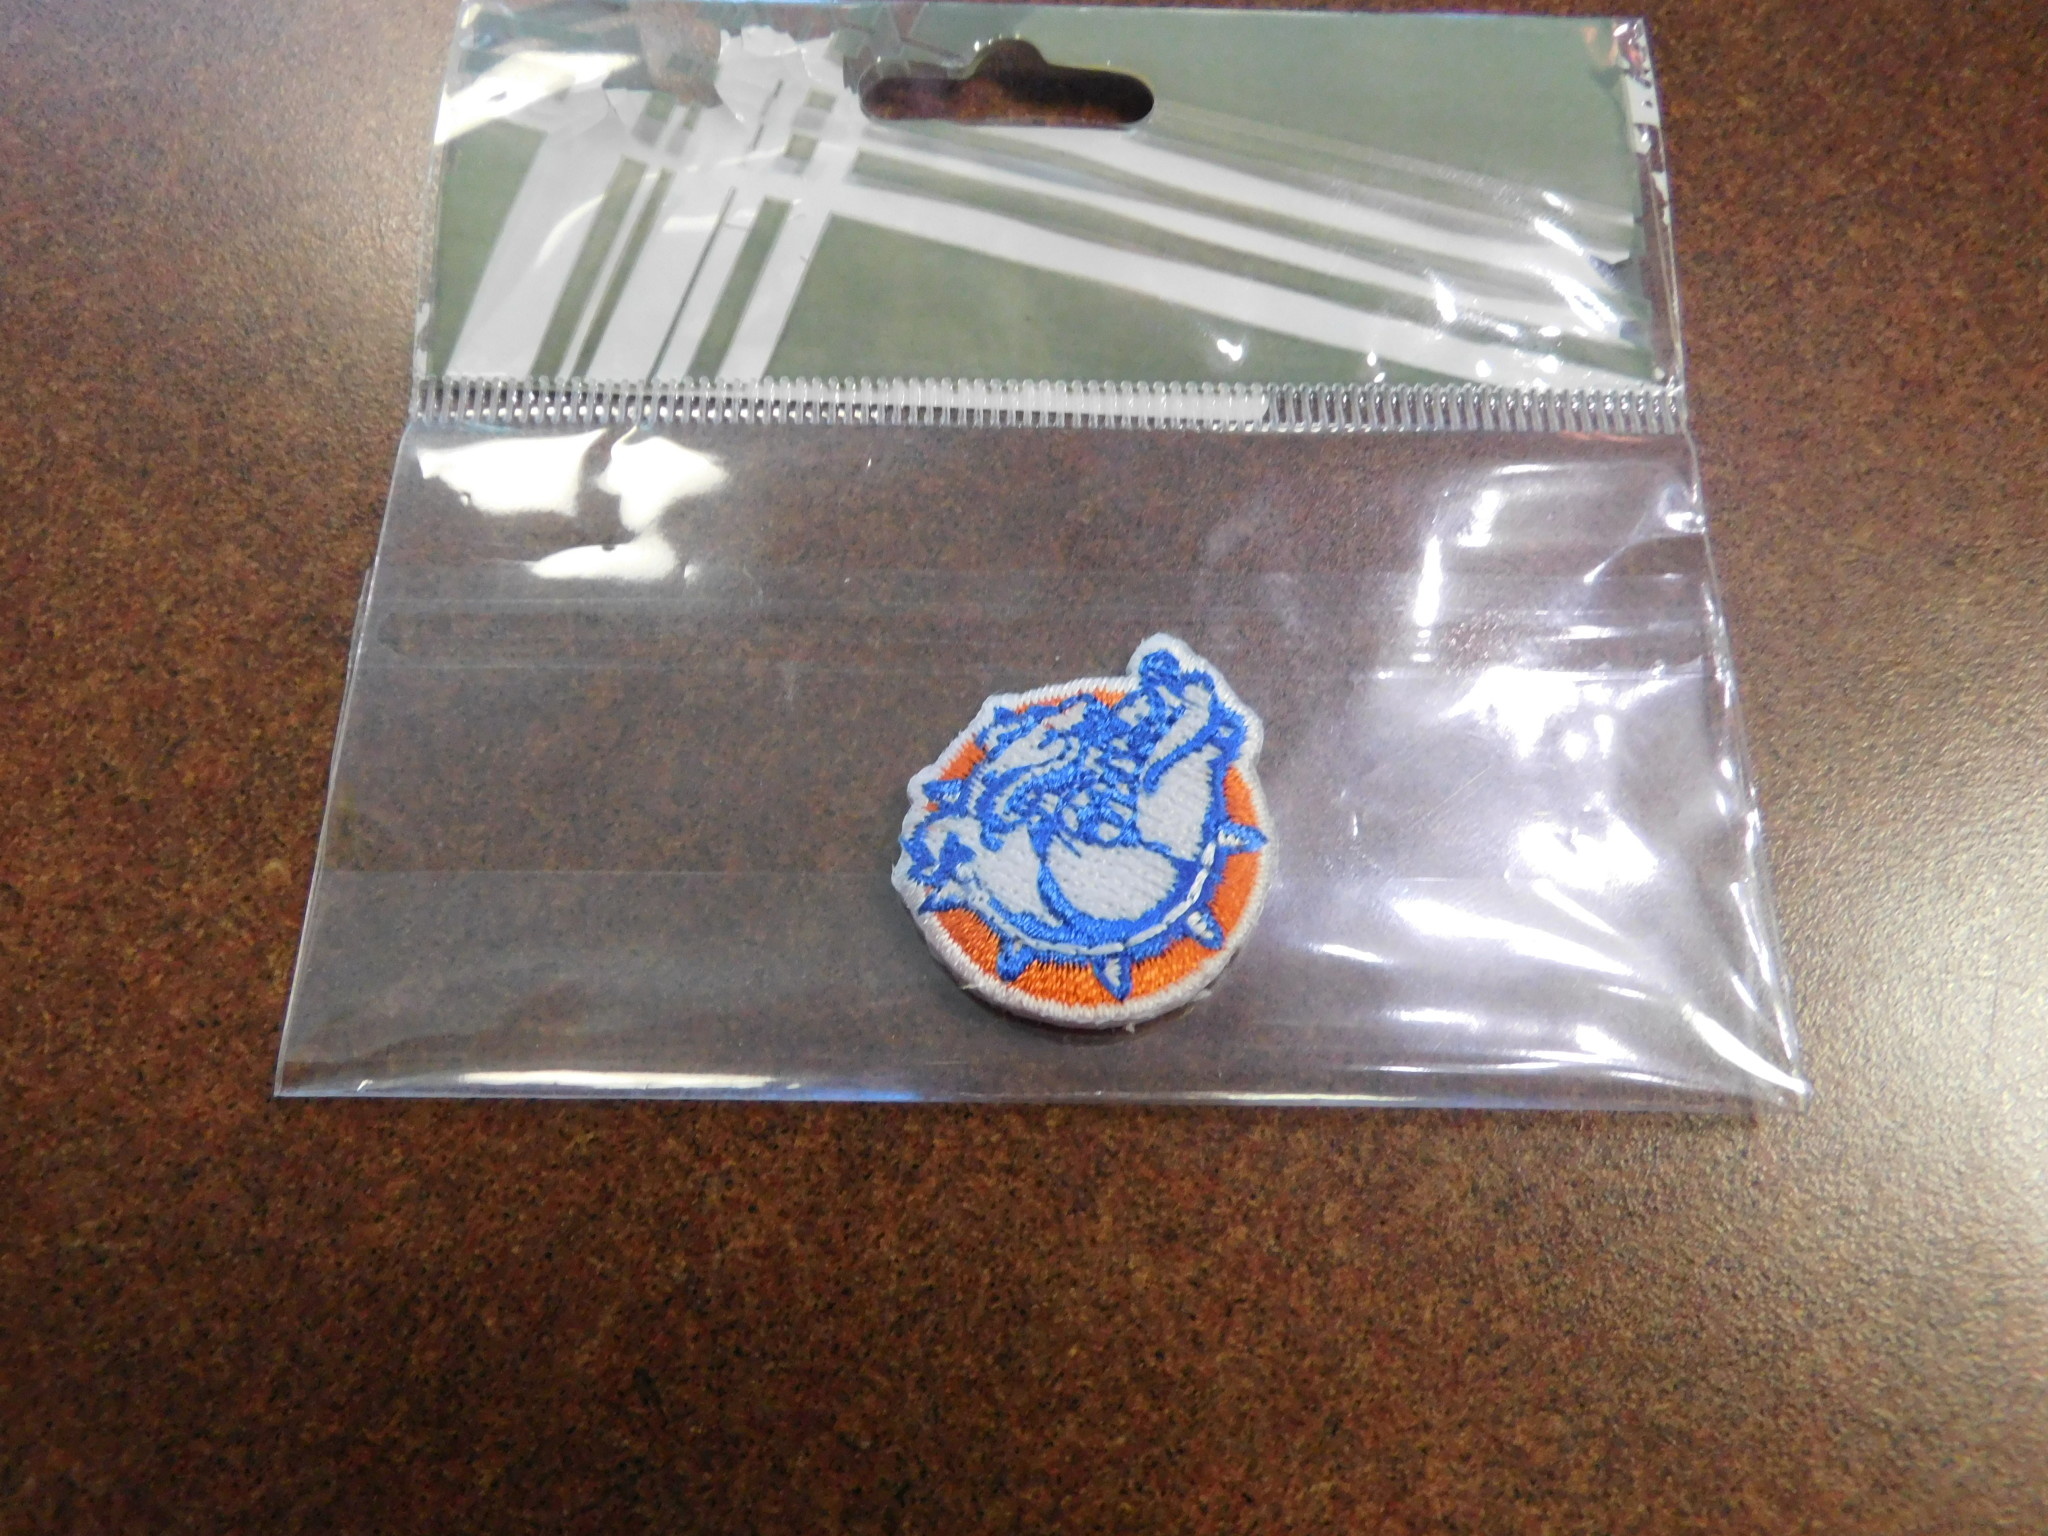 Neil Patch Emblem Embroidered Bulldog 1",",",02 Gift Merchandise"